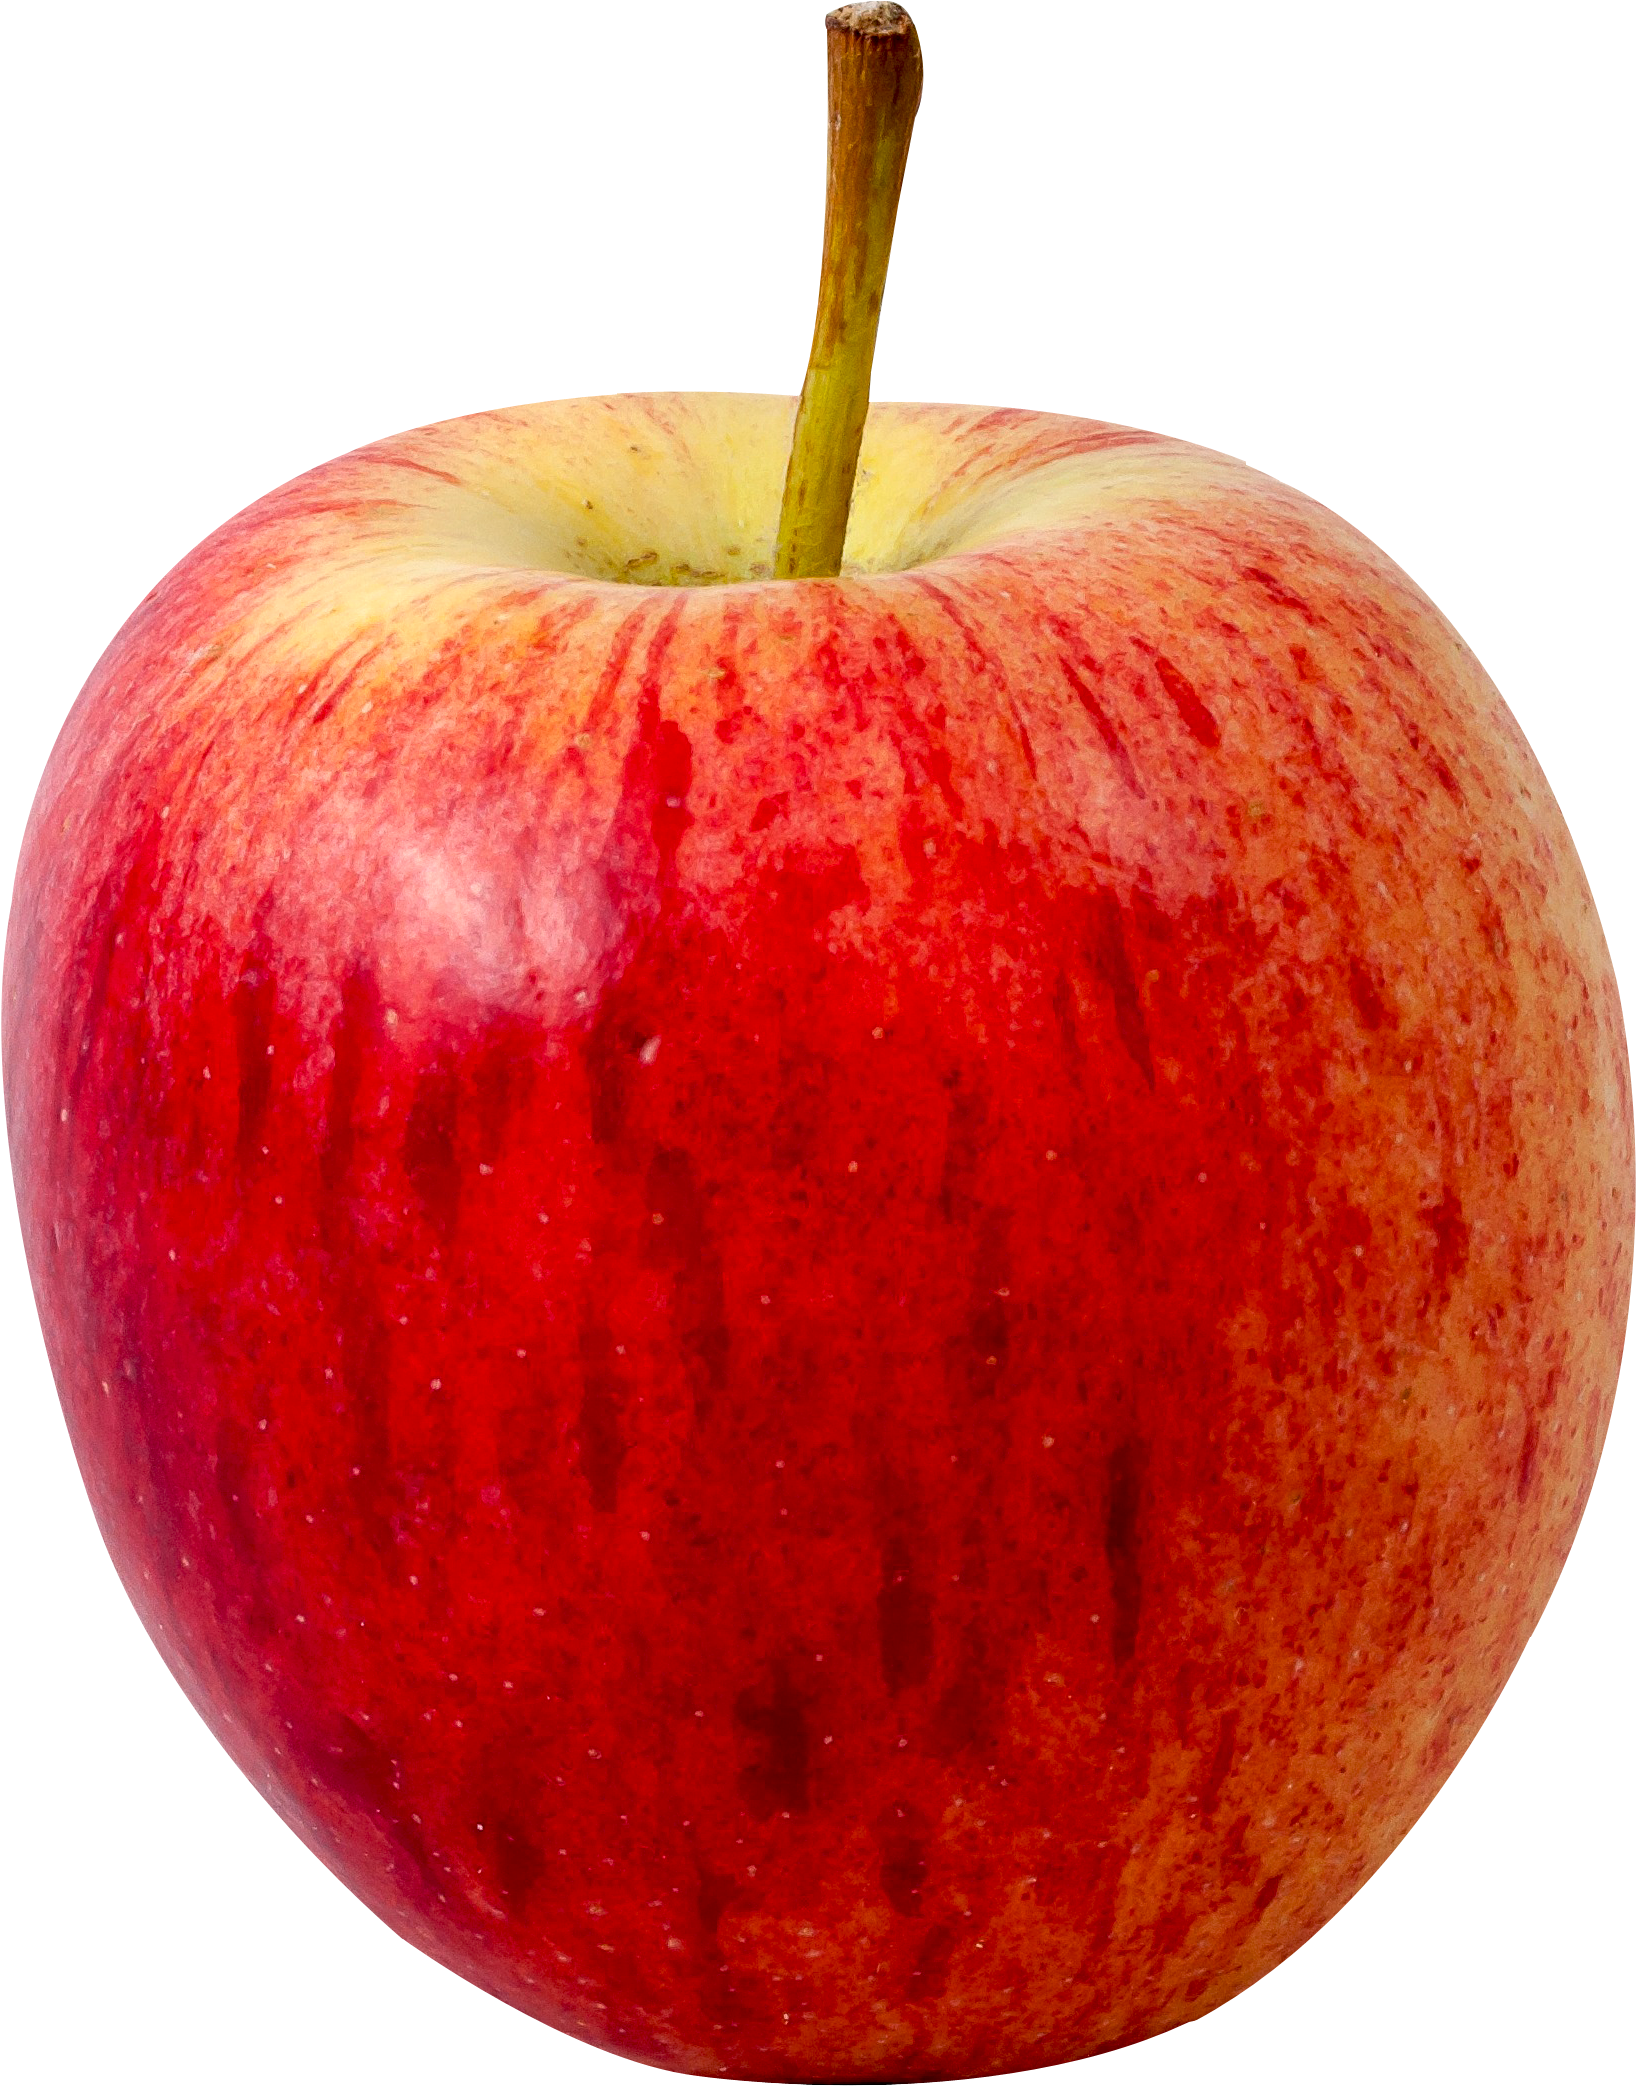 Shining Red PNG transparente de la fruta de manzana